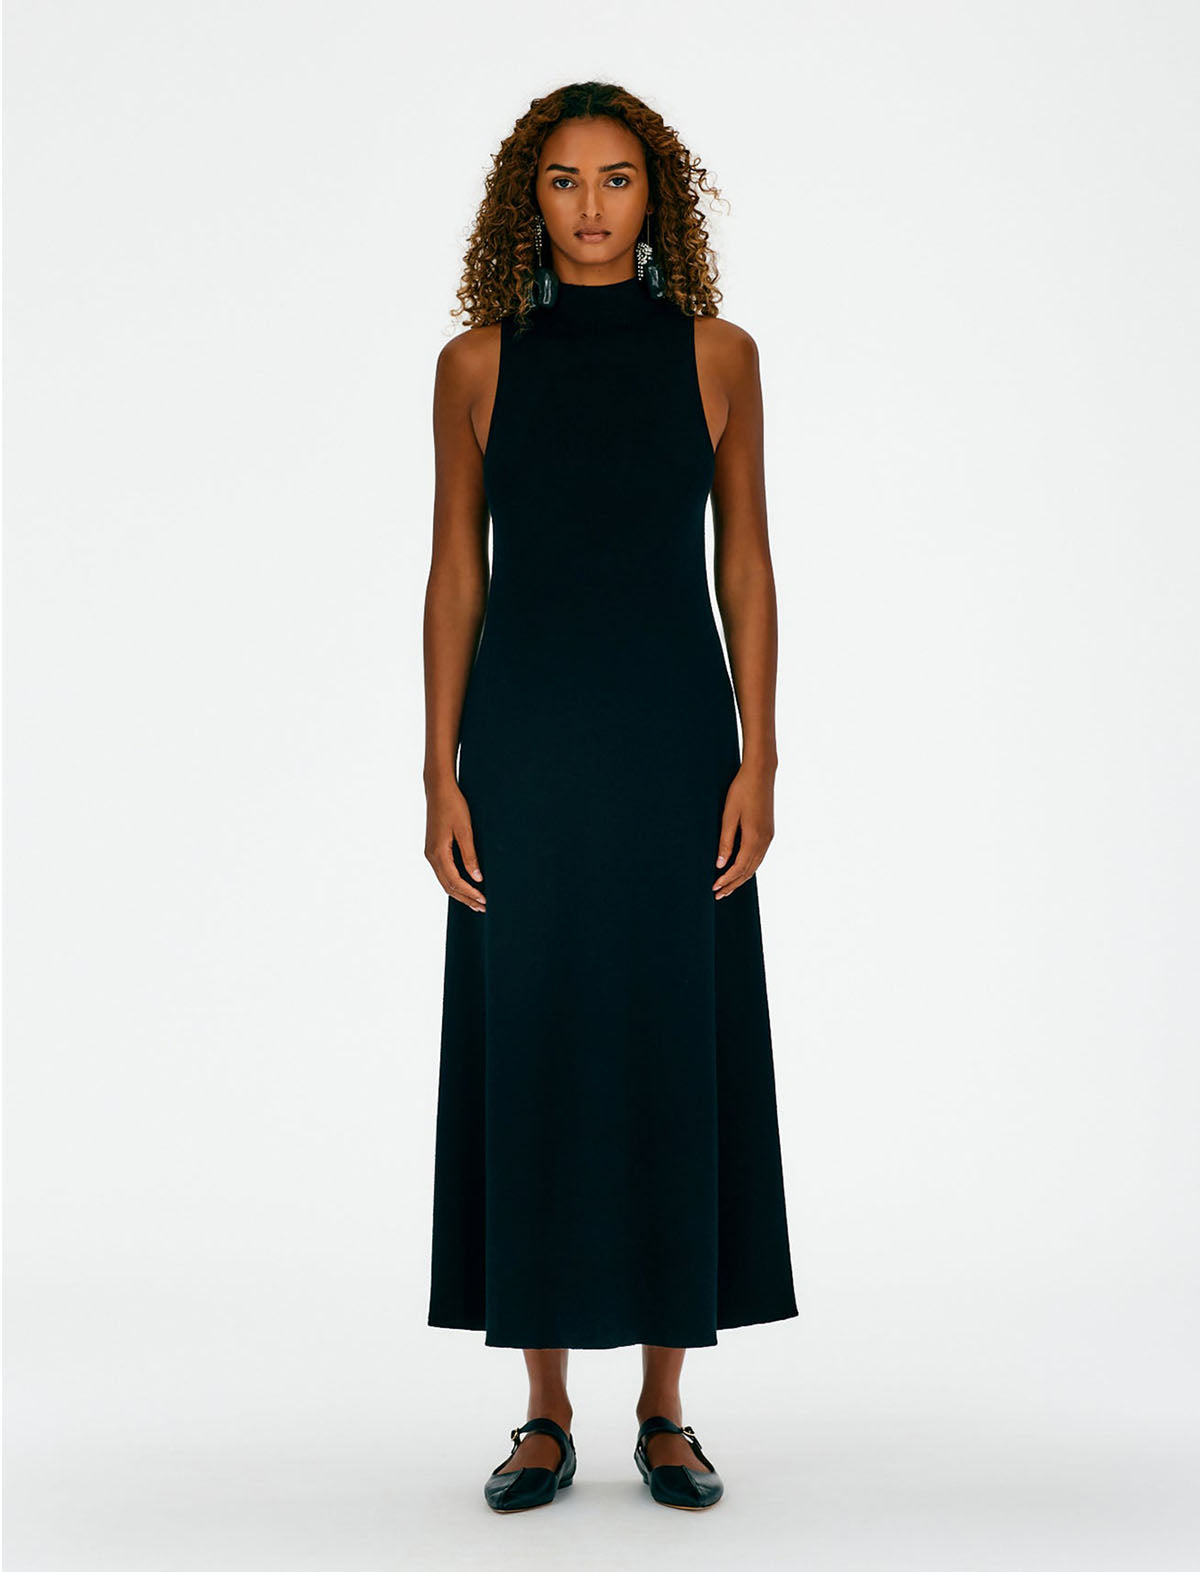 TIBI Organic Cotton Tencel Circle Open-Back Sleeveless Dress in Black